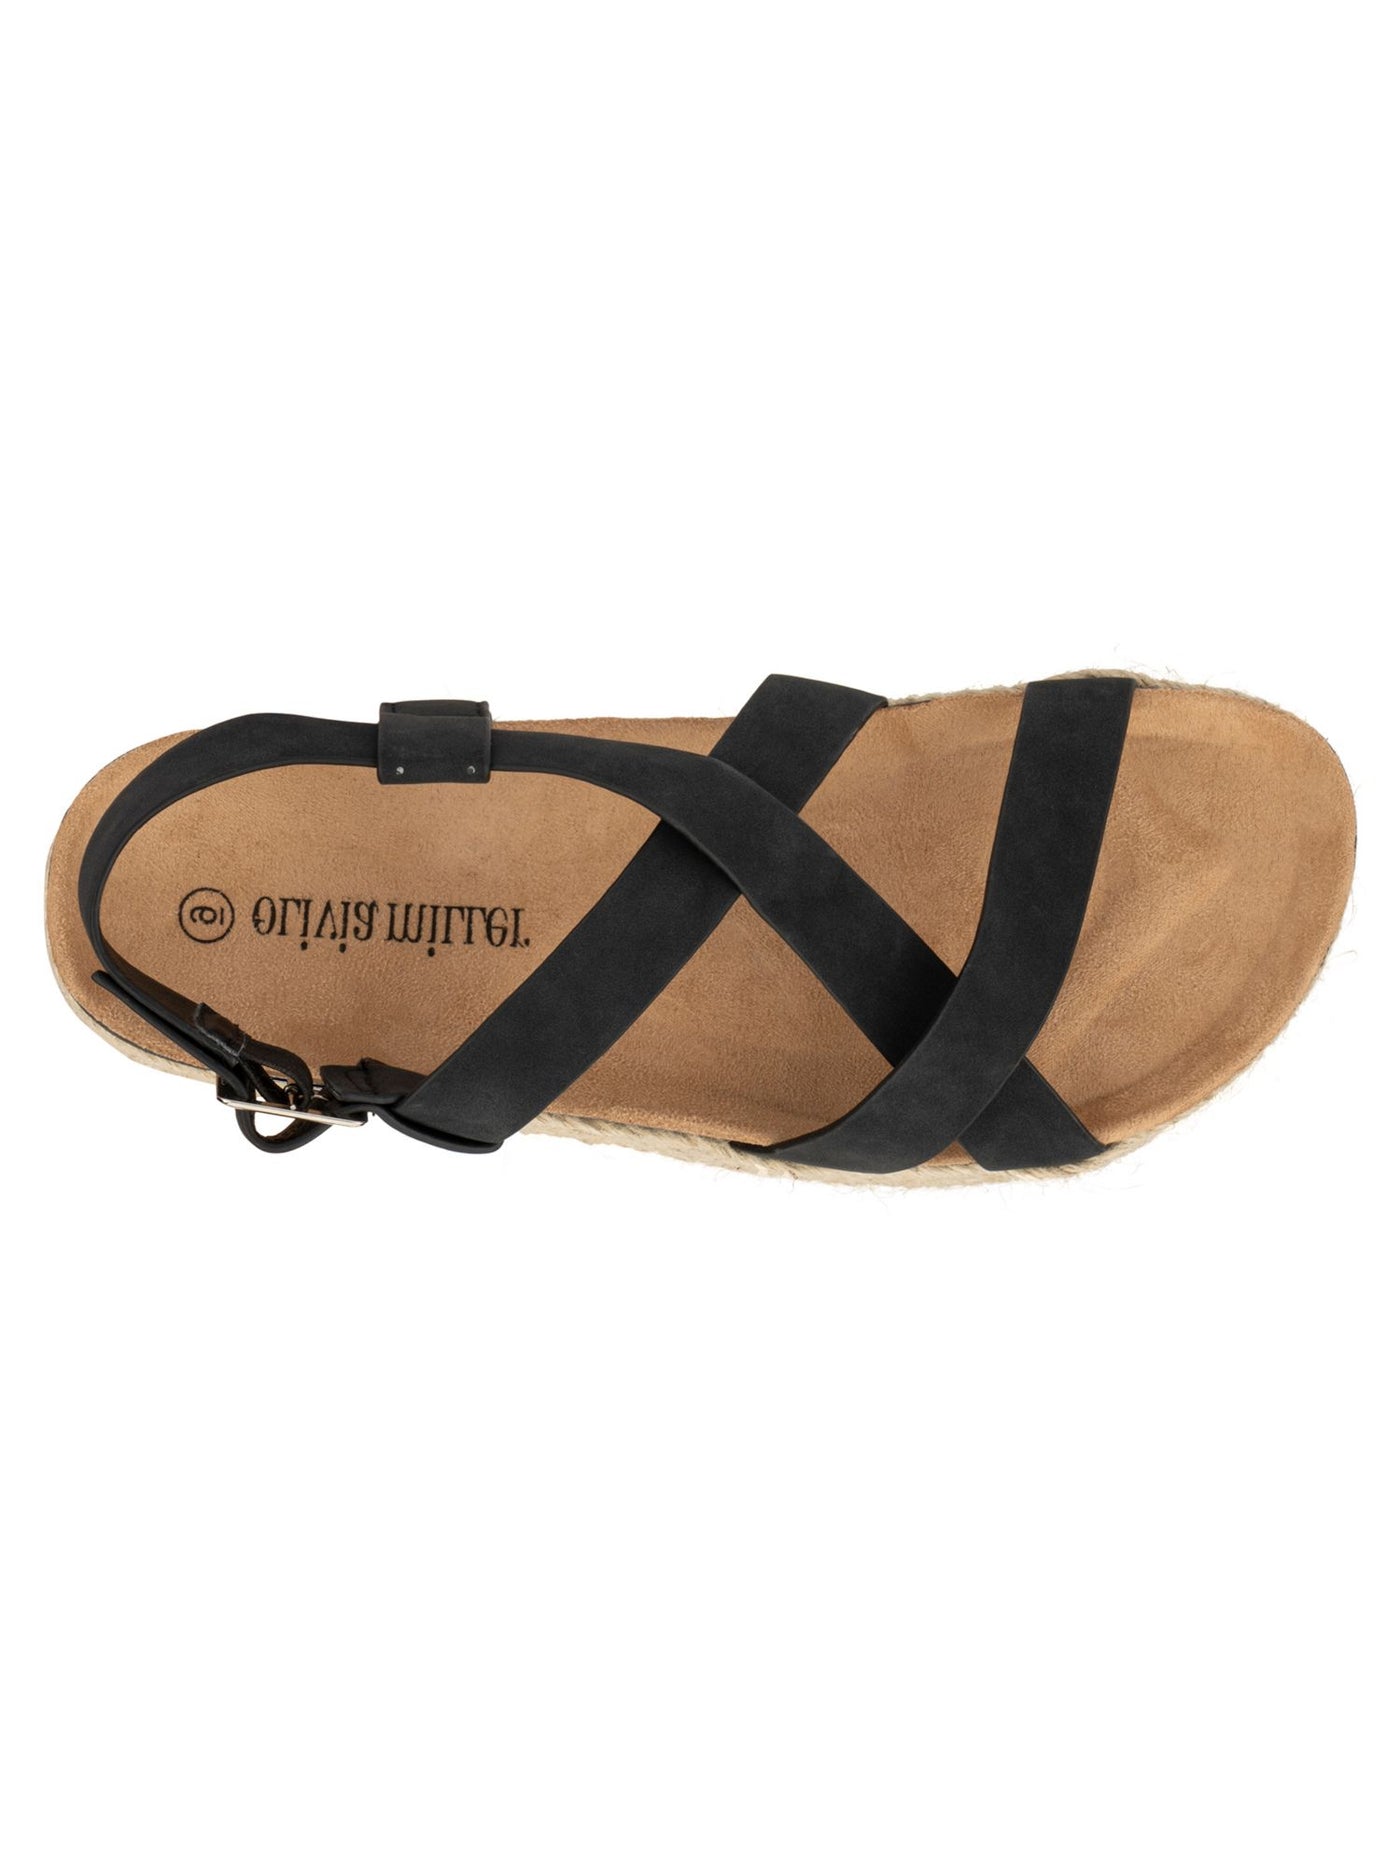 OLIVIA MILLER Womens Black 1" Platform Asymmetrical Strappy Byron Bay Round Toe Buckle Espadrille Shoes 6